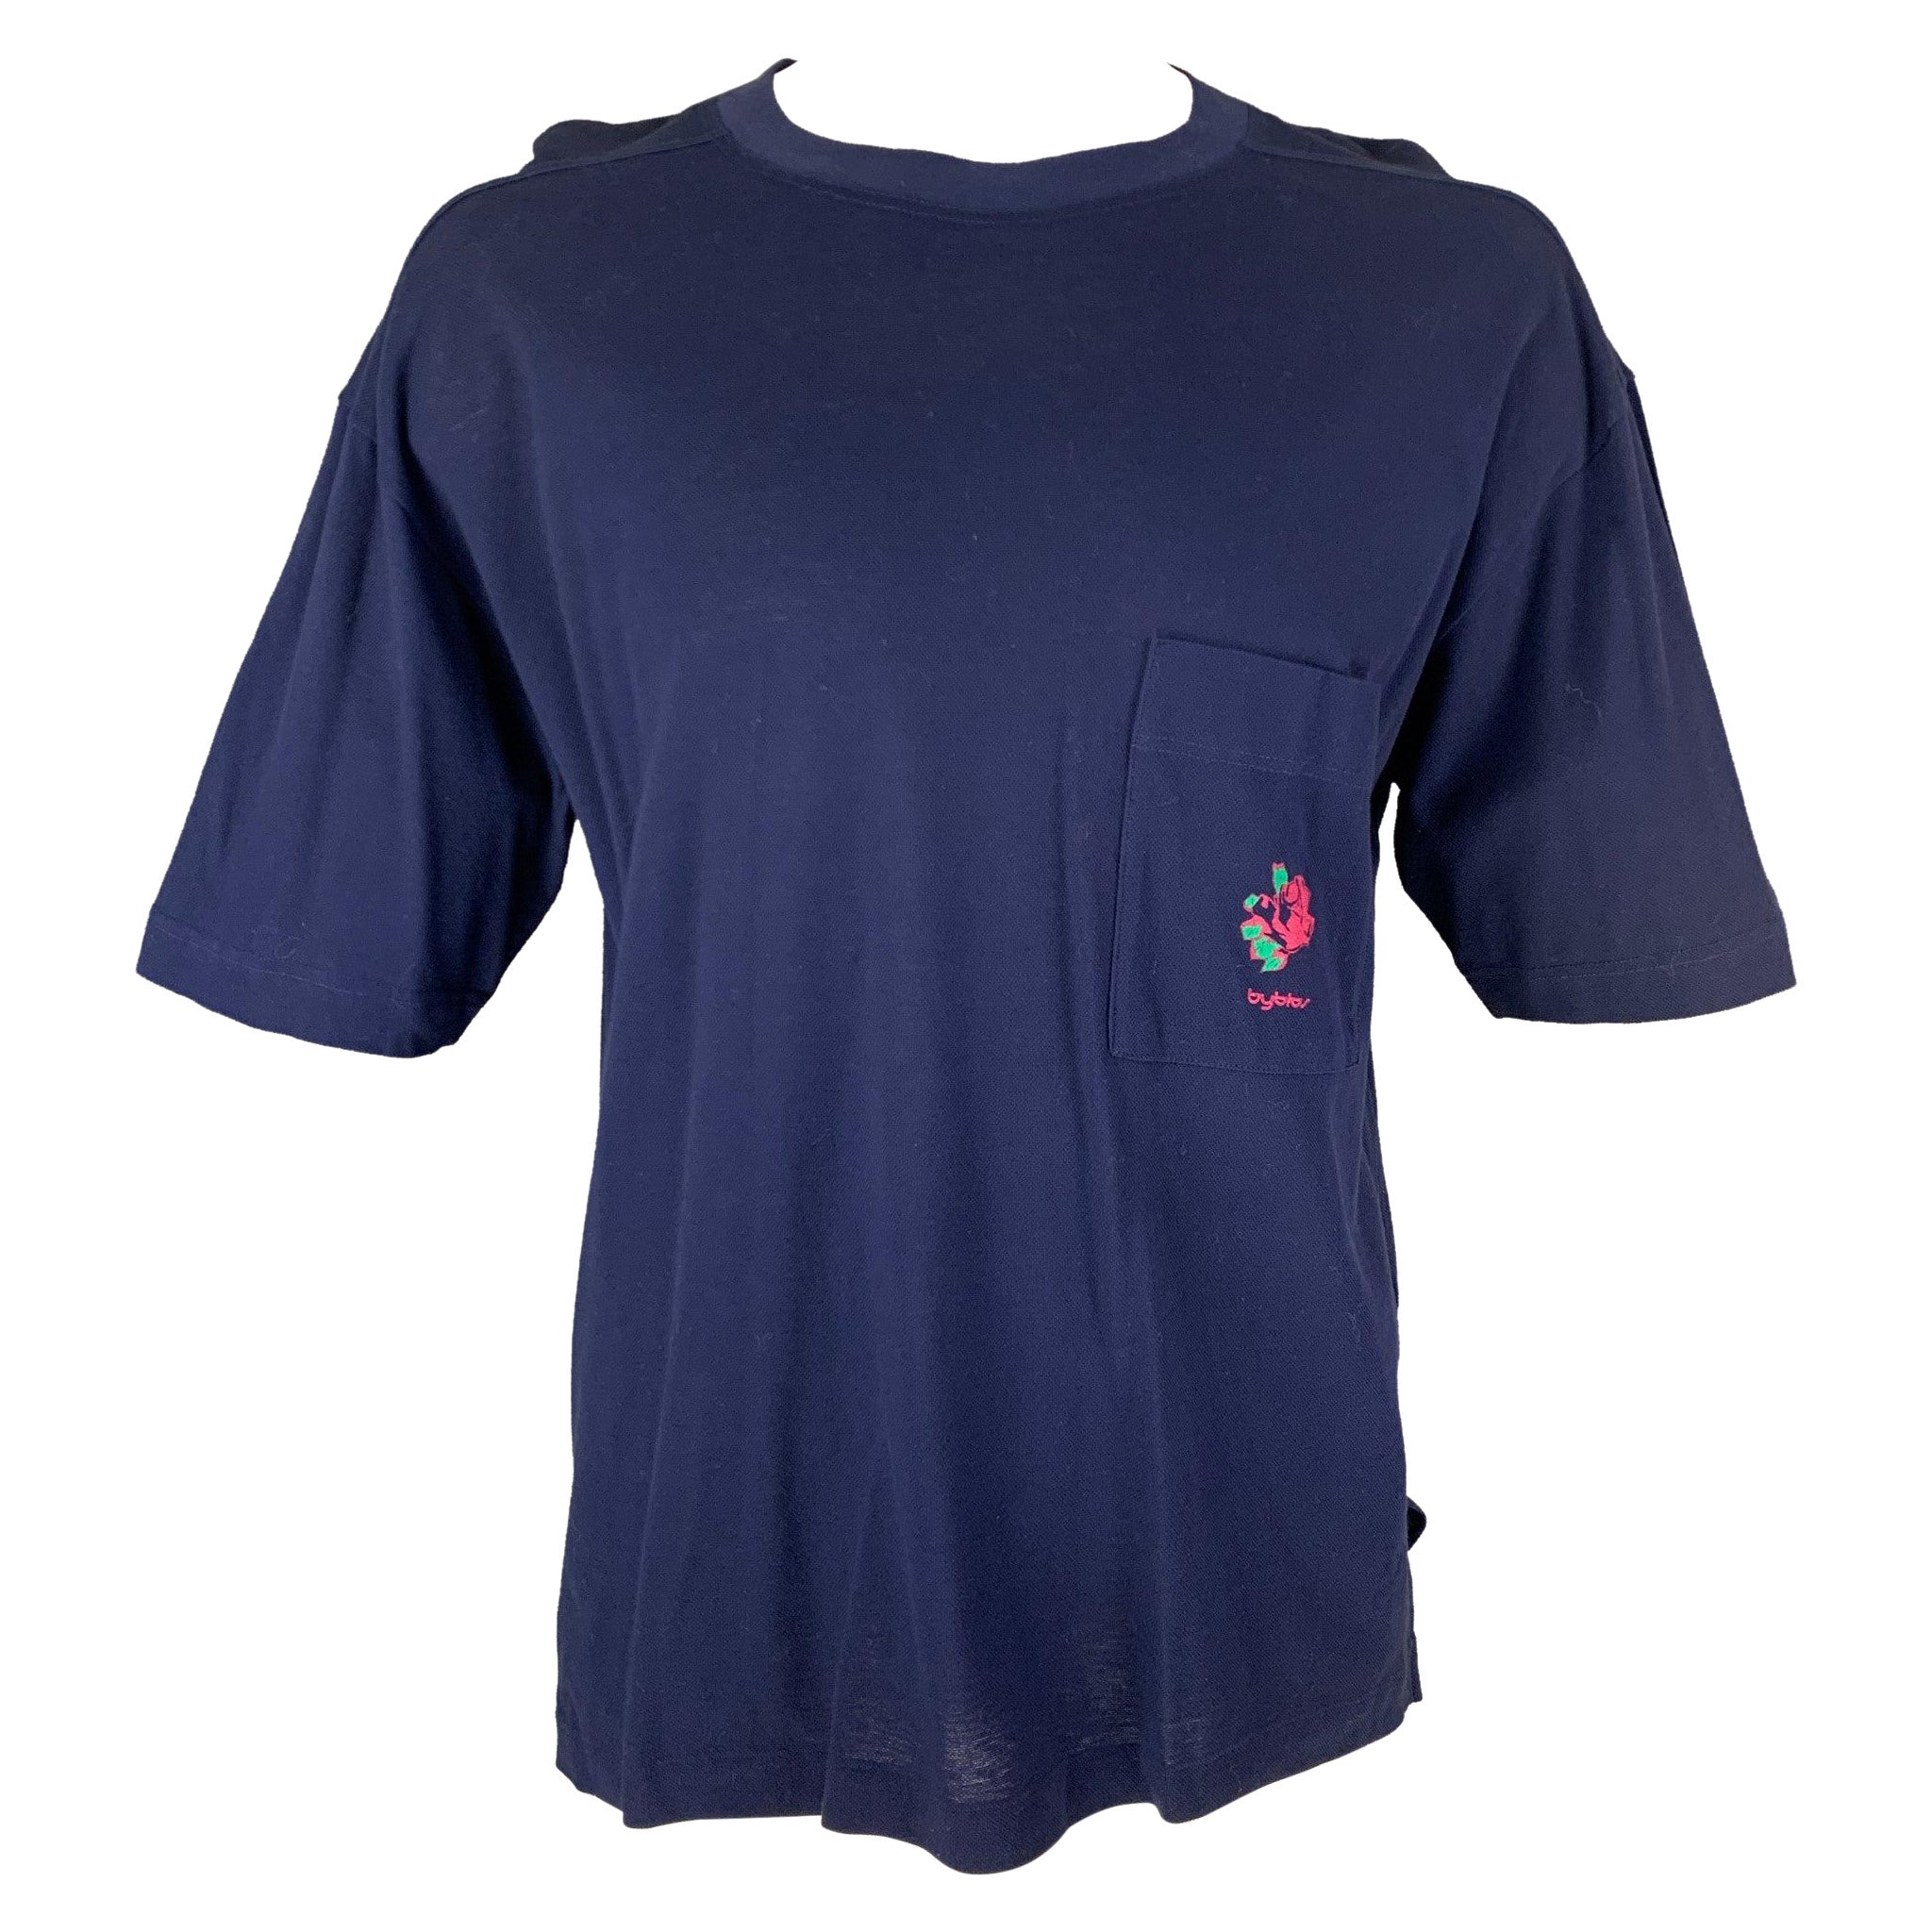 BYBLOS Size L Navy Cotton Short Sleeve T-shirt For Sale